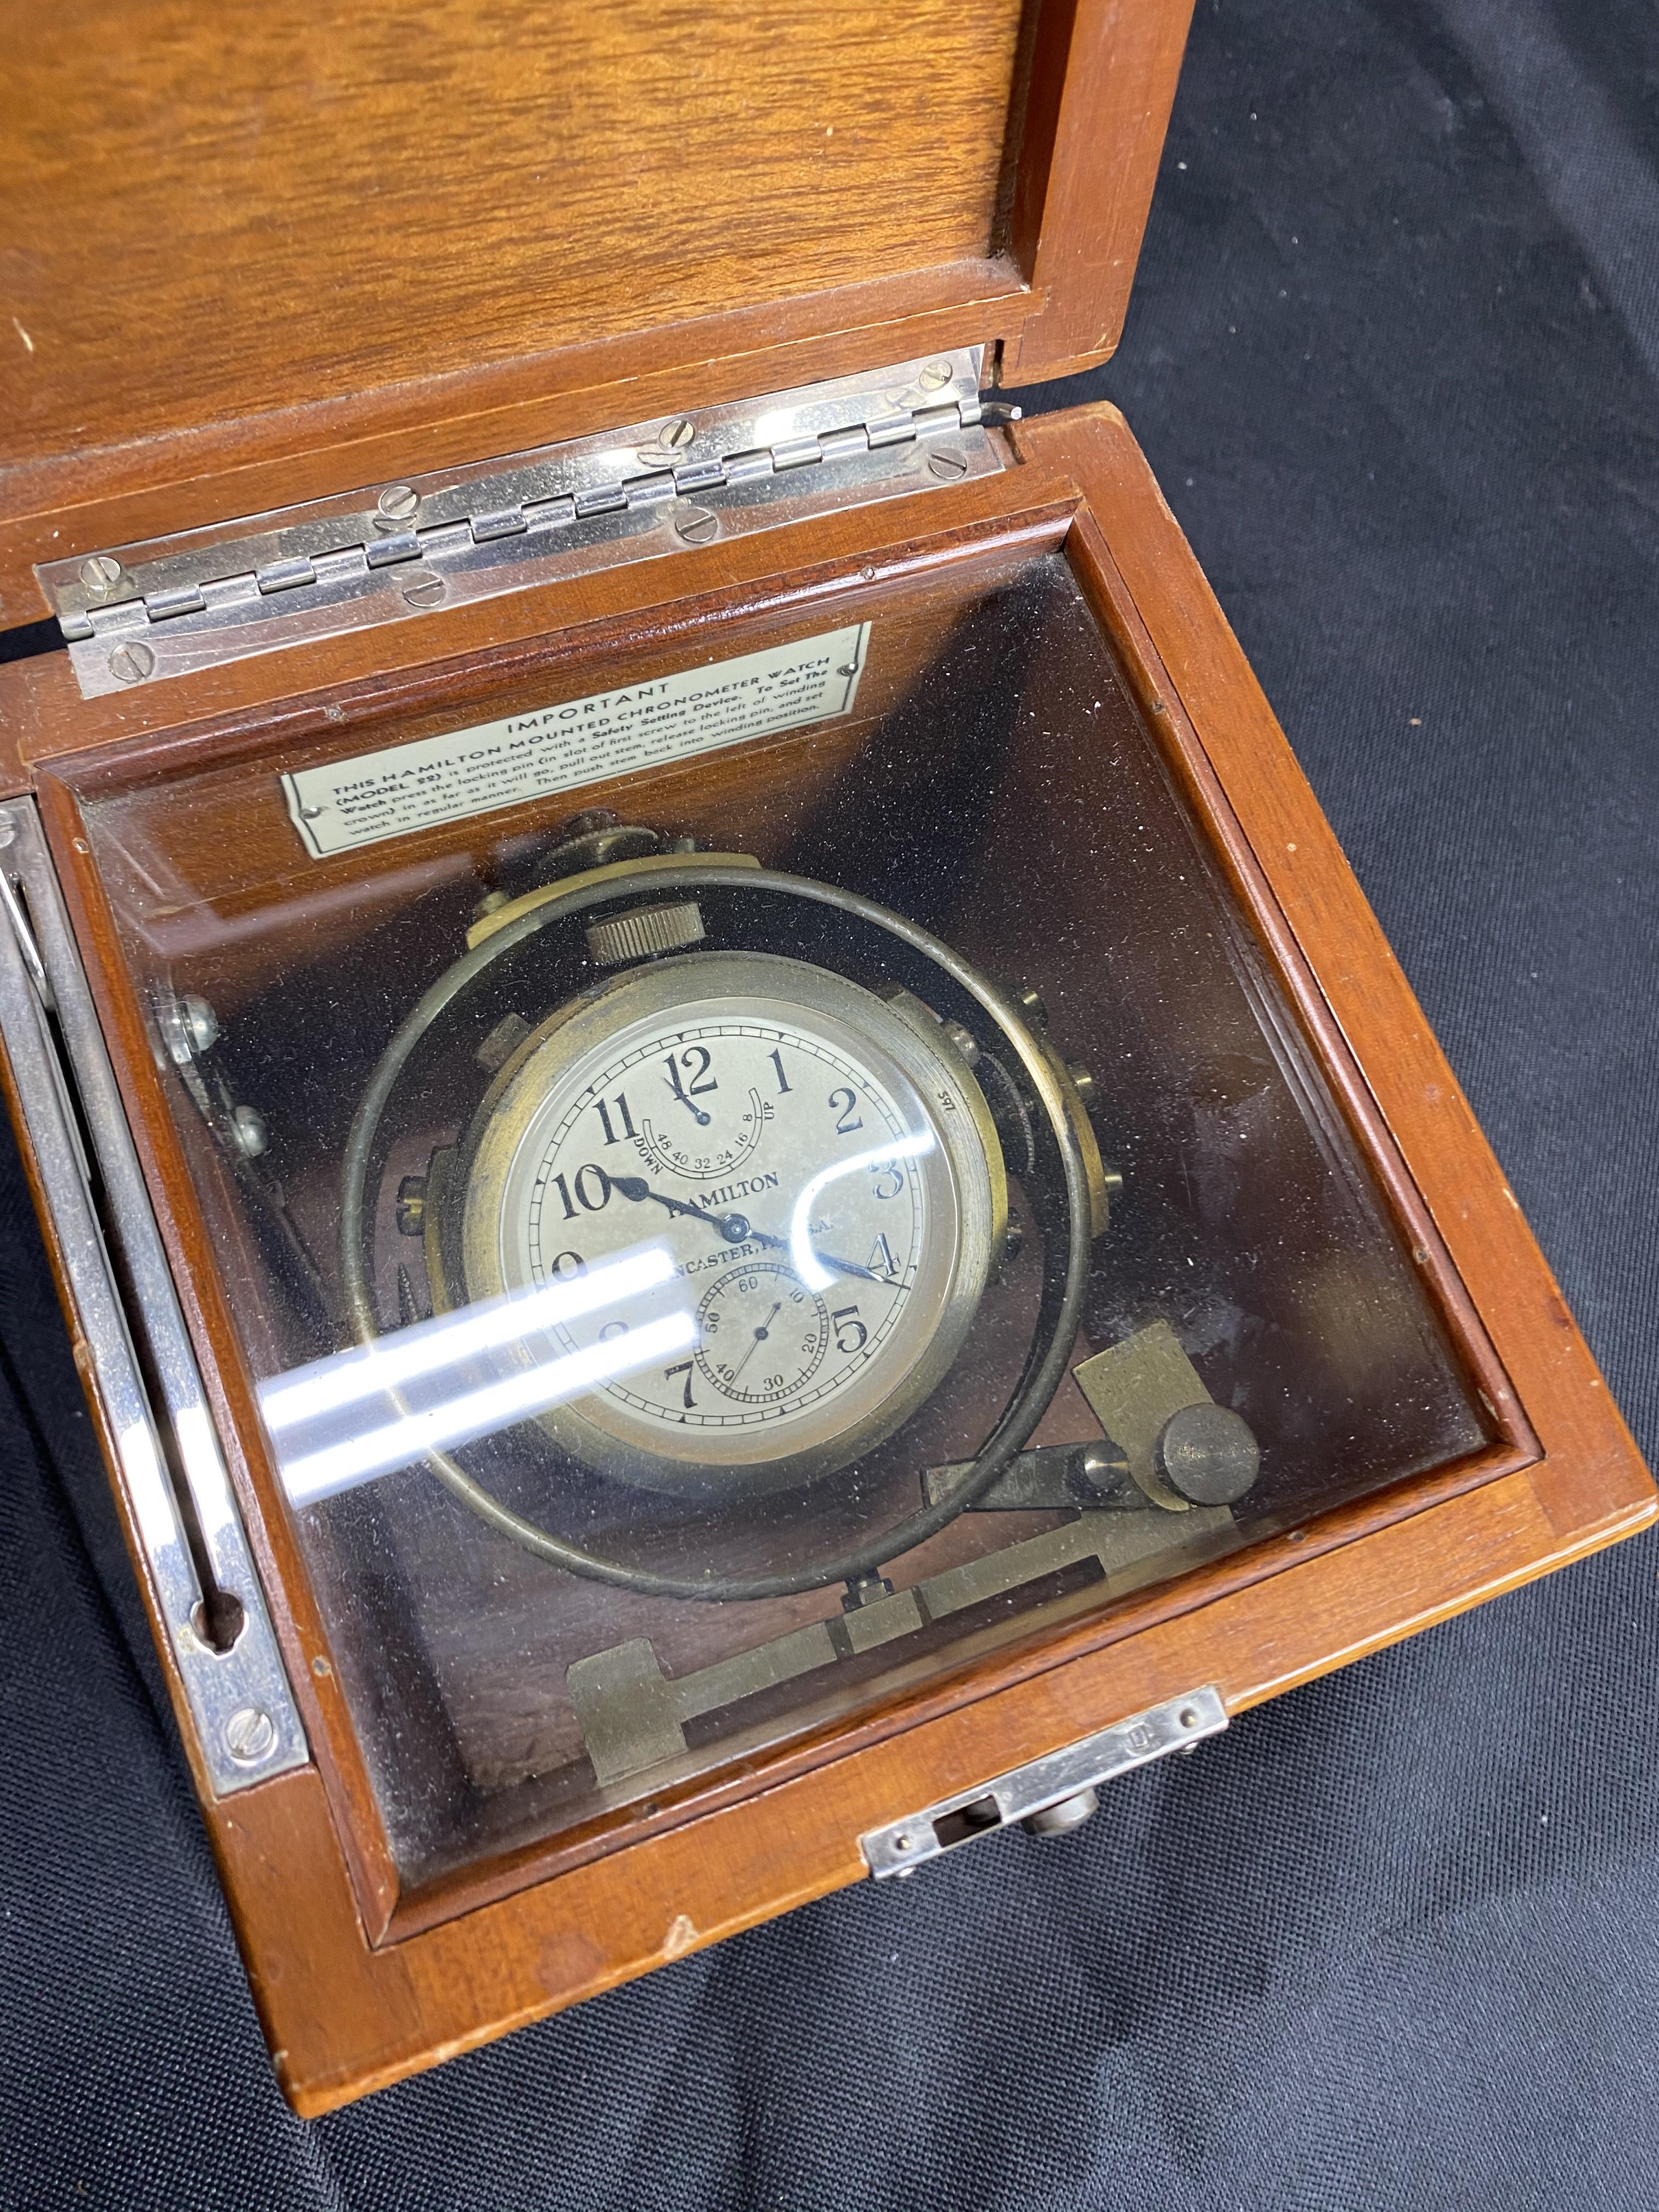 Vintage Hamilton Ship's Chronometer in Gimballed case